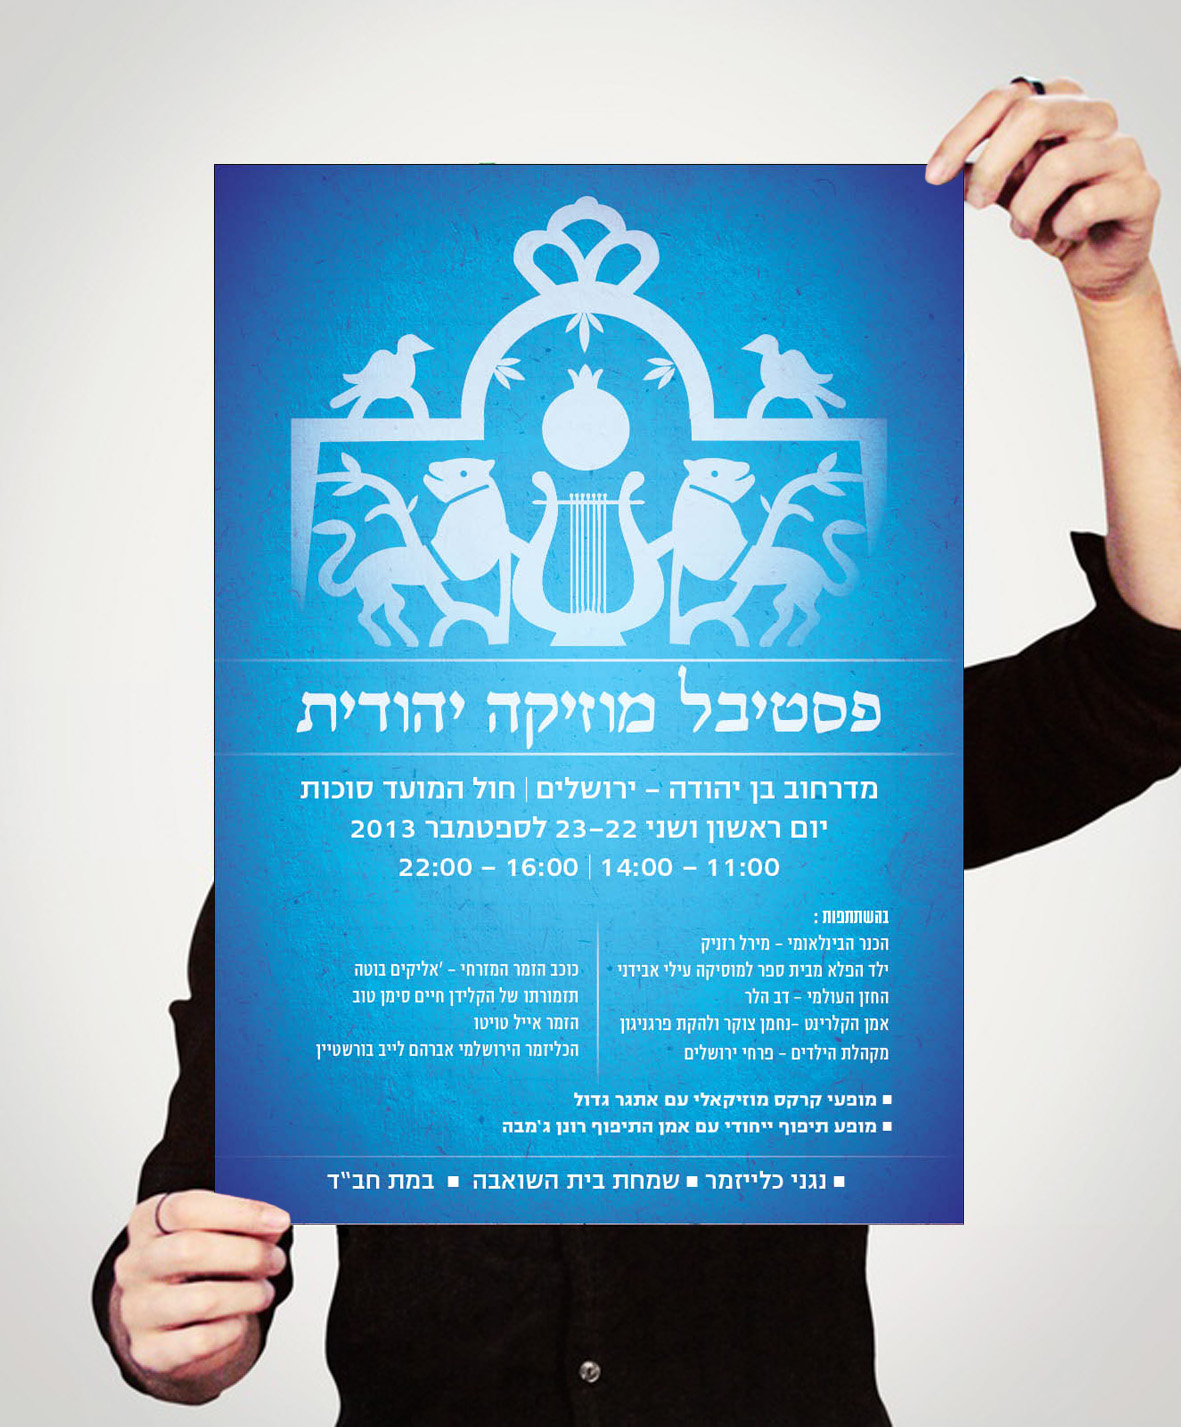 festival israel poster jerusalem Hebrow israeli judaism